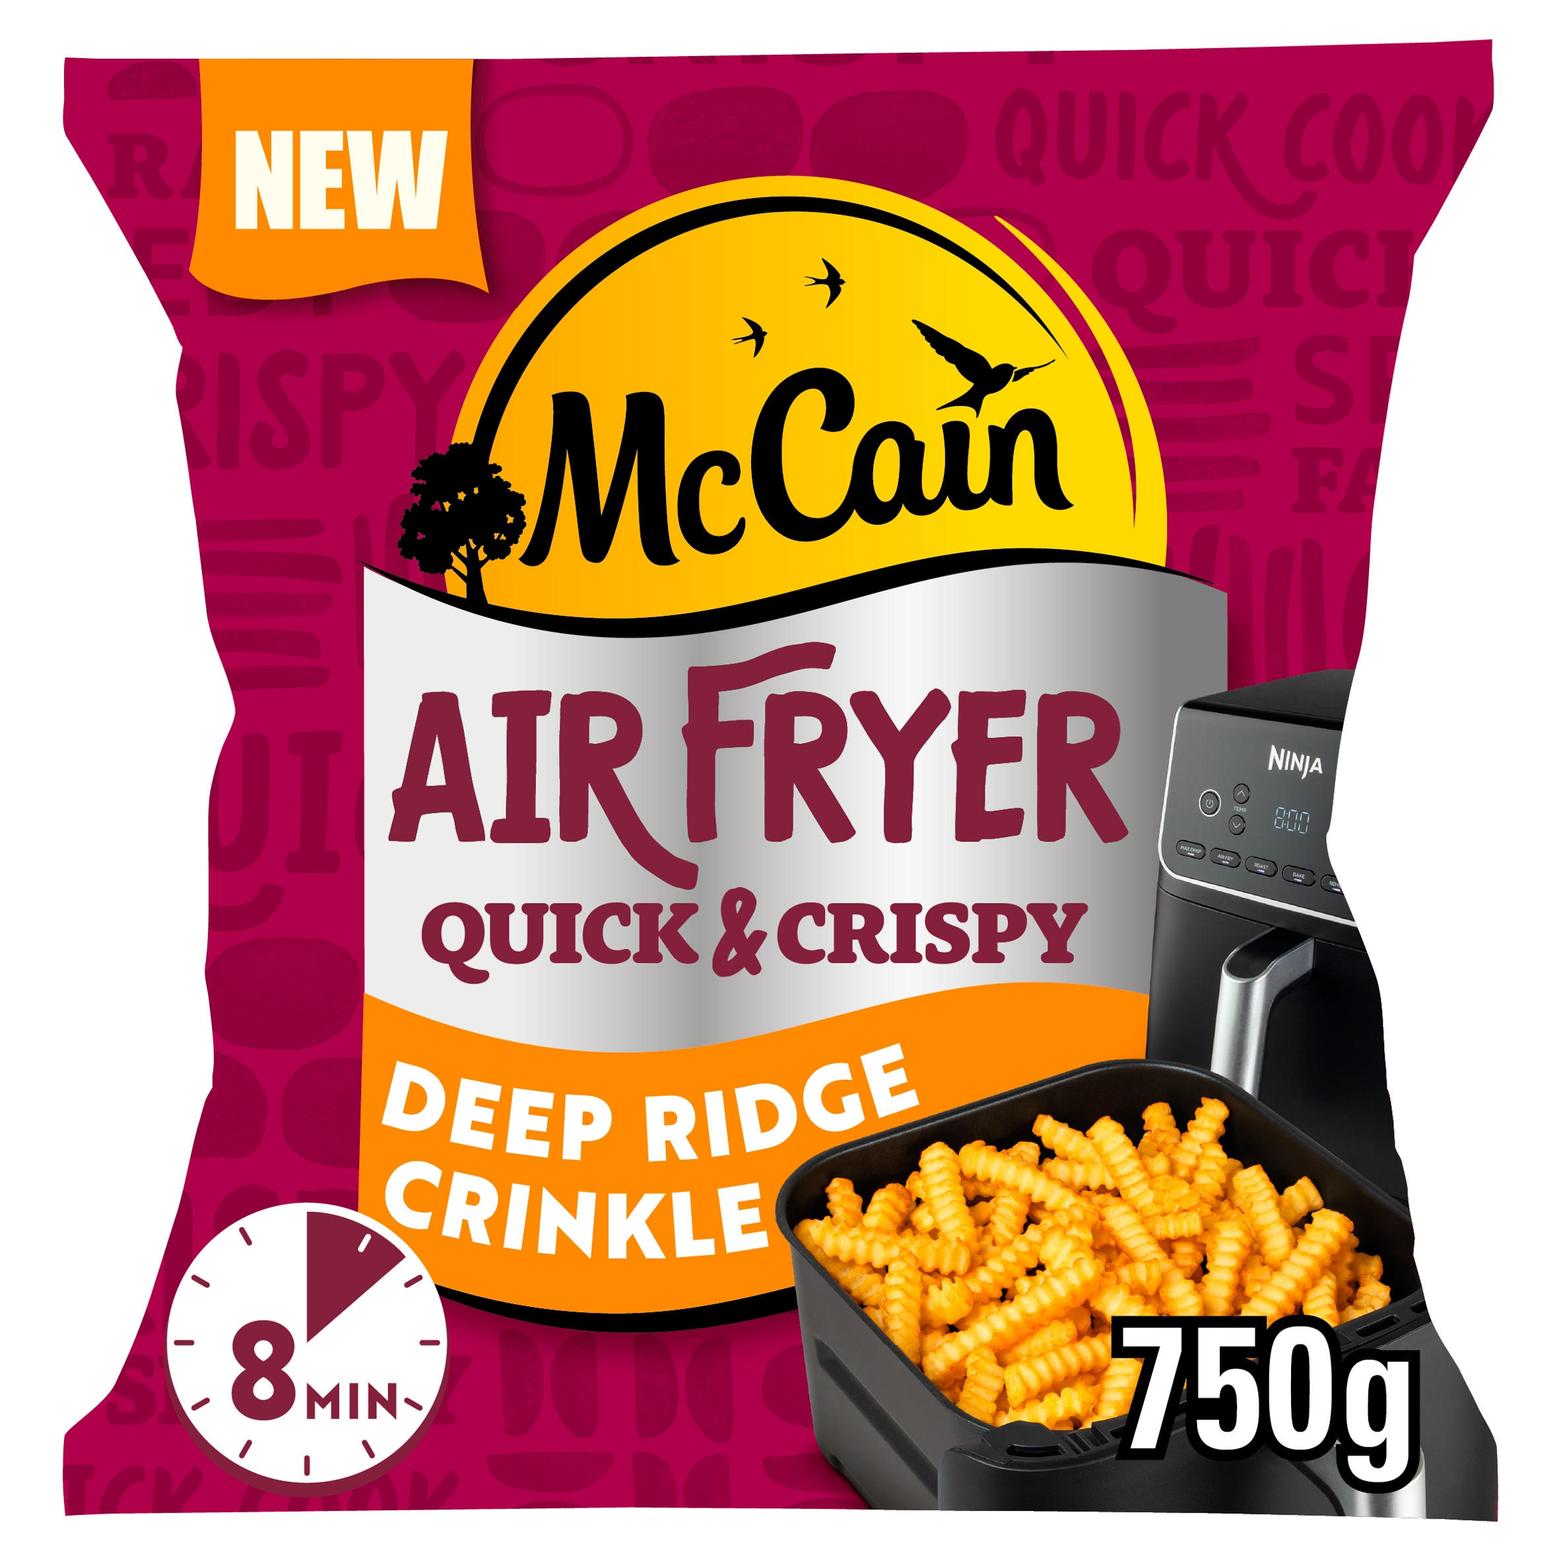 McCain Air Fryer Deep Ridge Crinkle 750g offers at £3.75 in Iceland